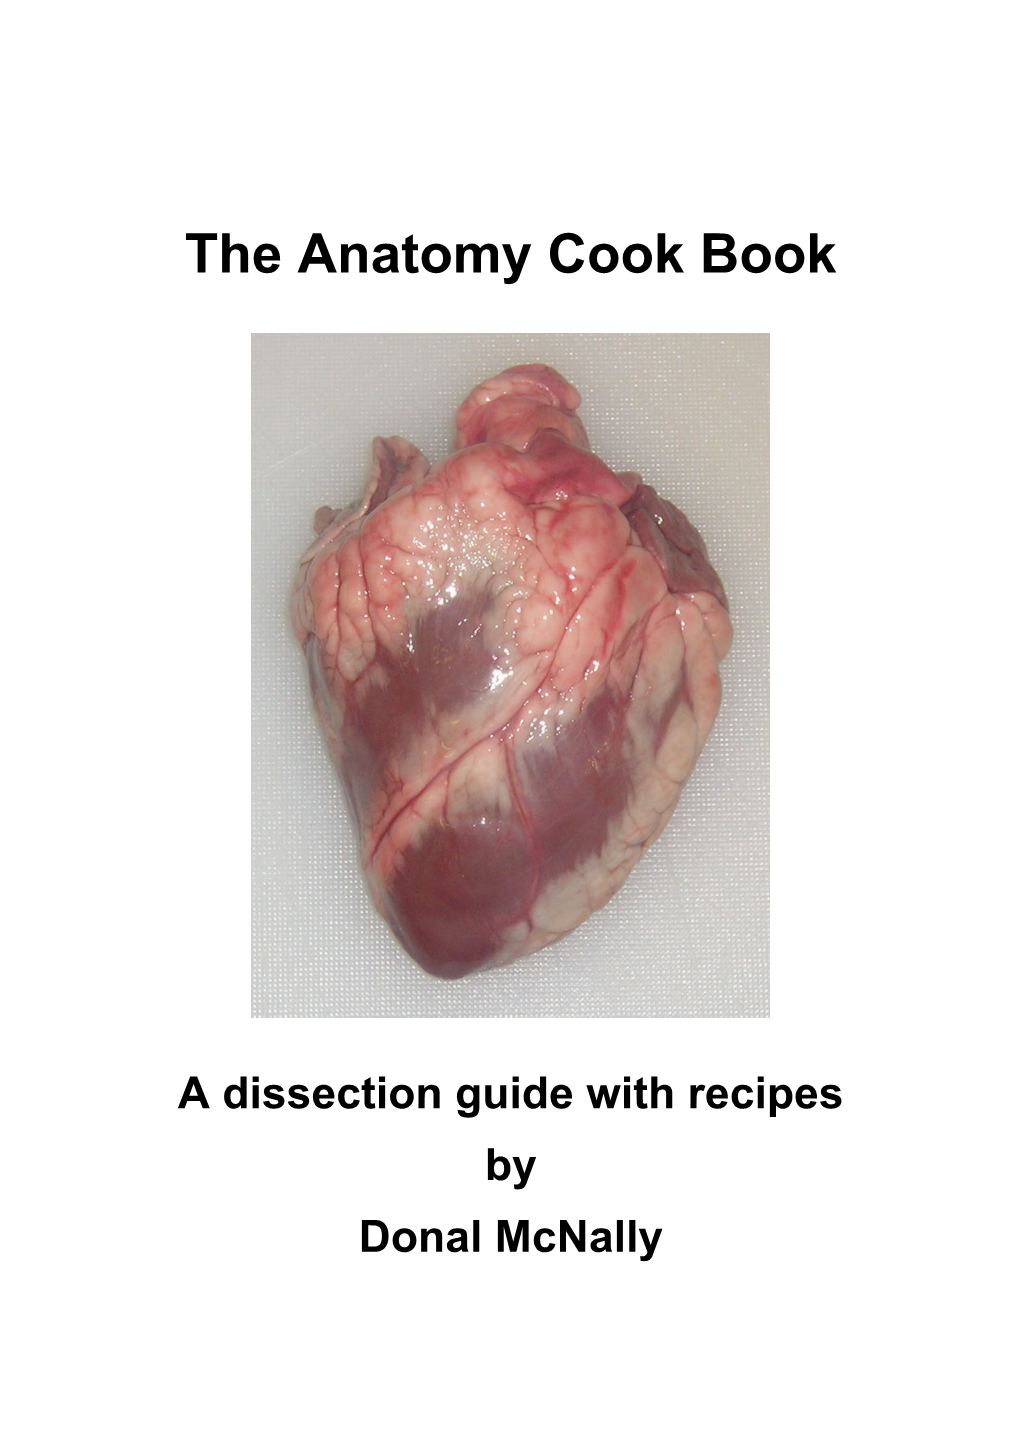 The Anatomy Cookbook